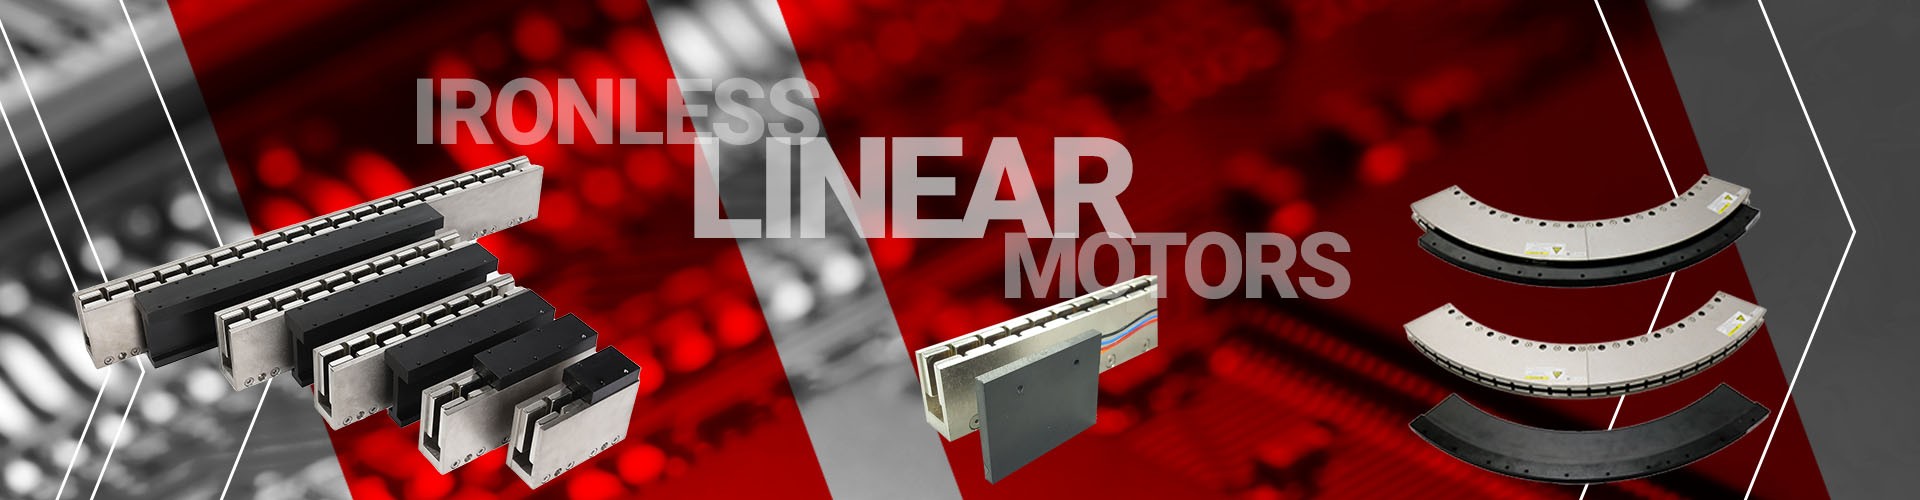 Ironless Linear Motors banner